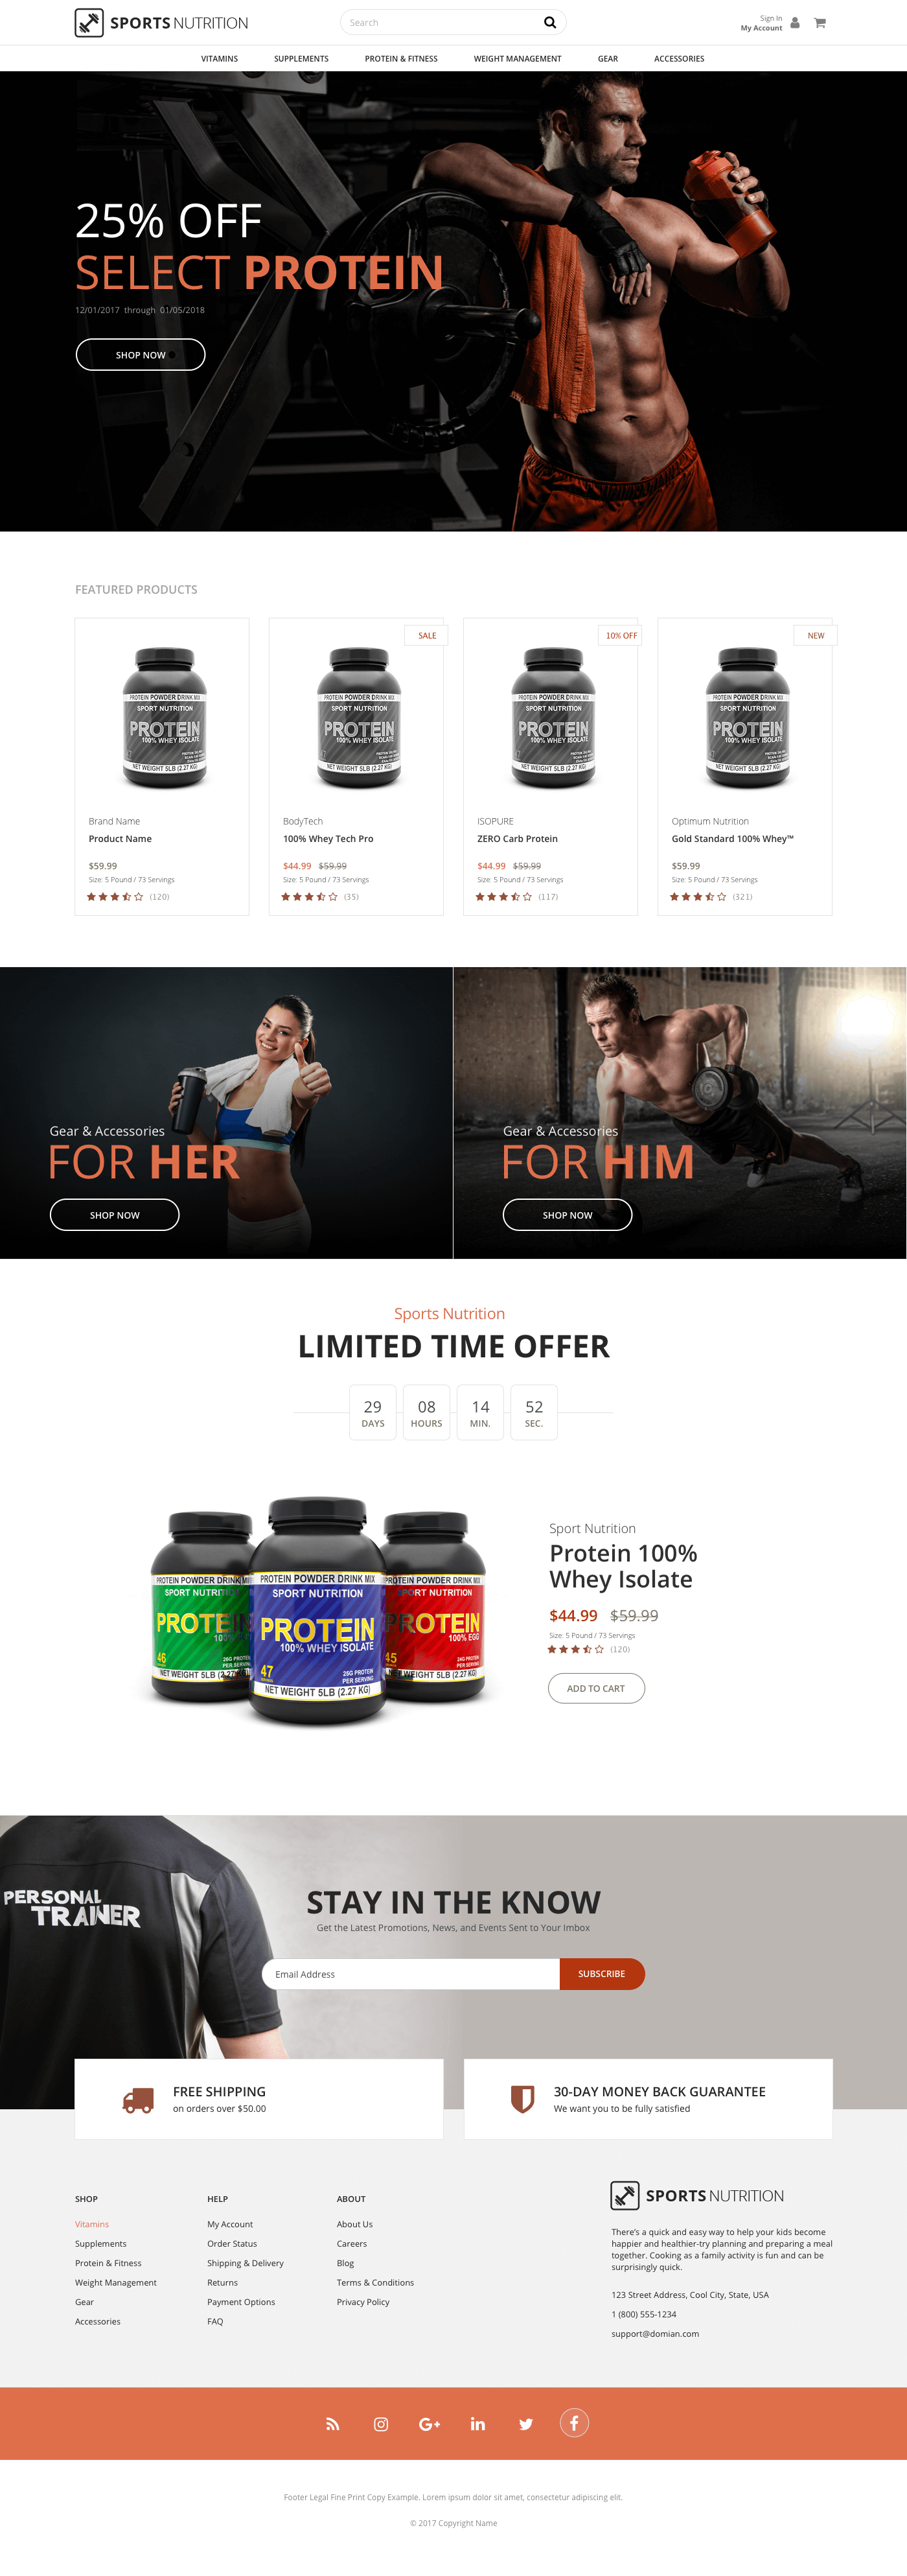 Sports Nutrition E-commerce Theme Design Mockup: Homepage